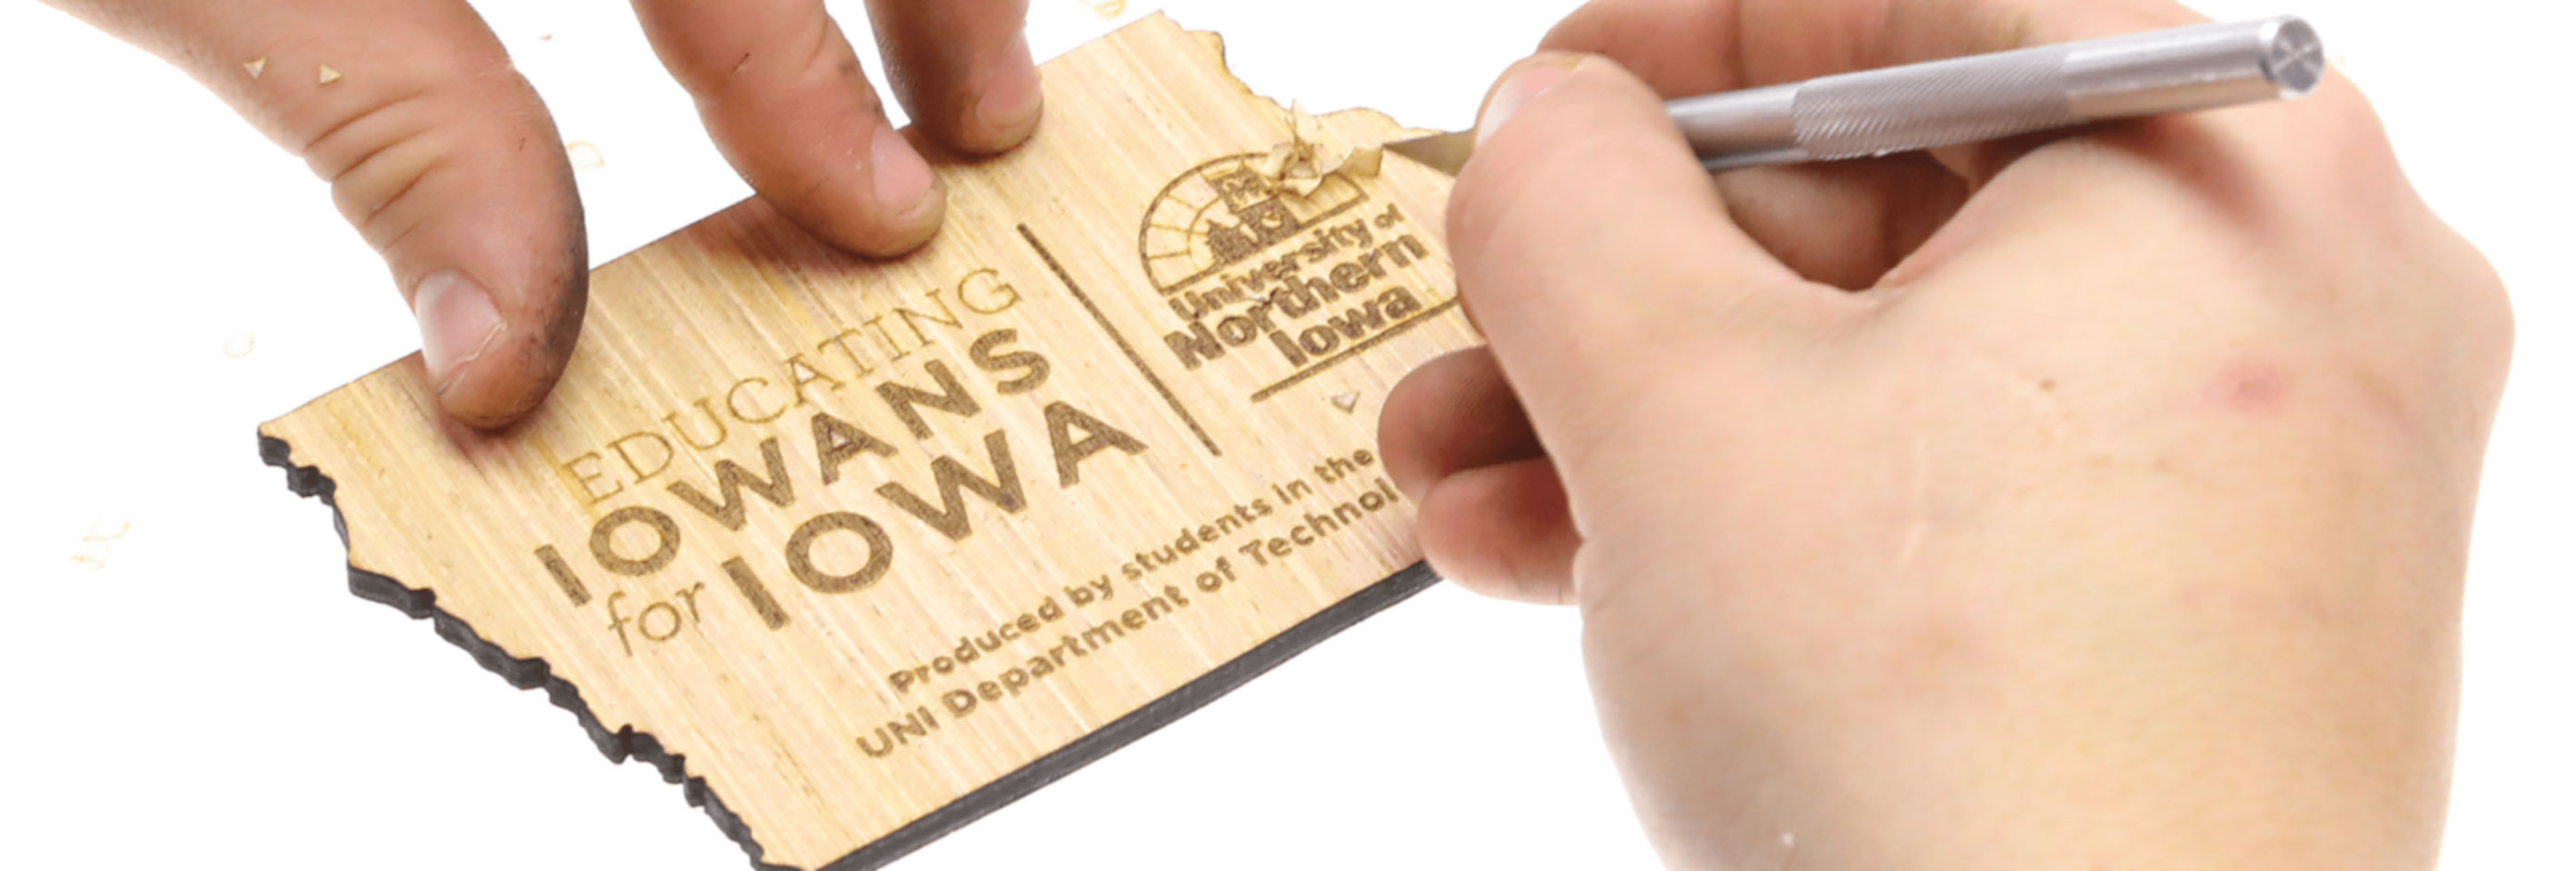 Educating Iowans engraving.